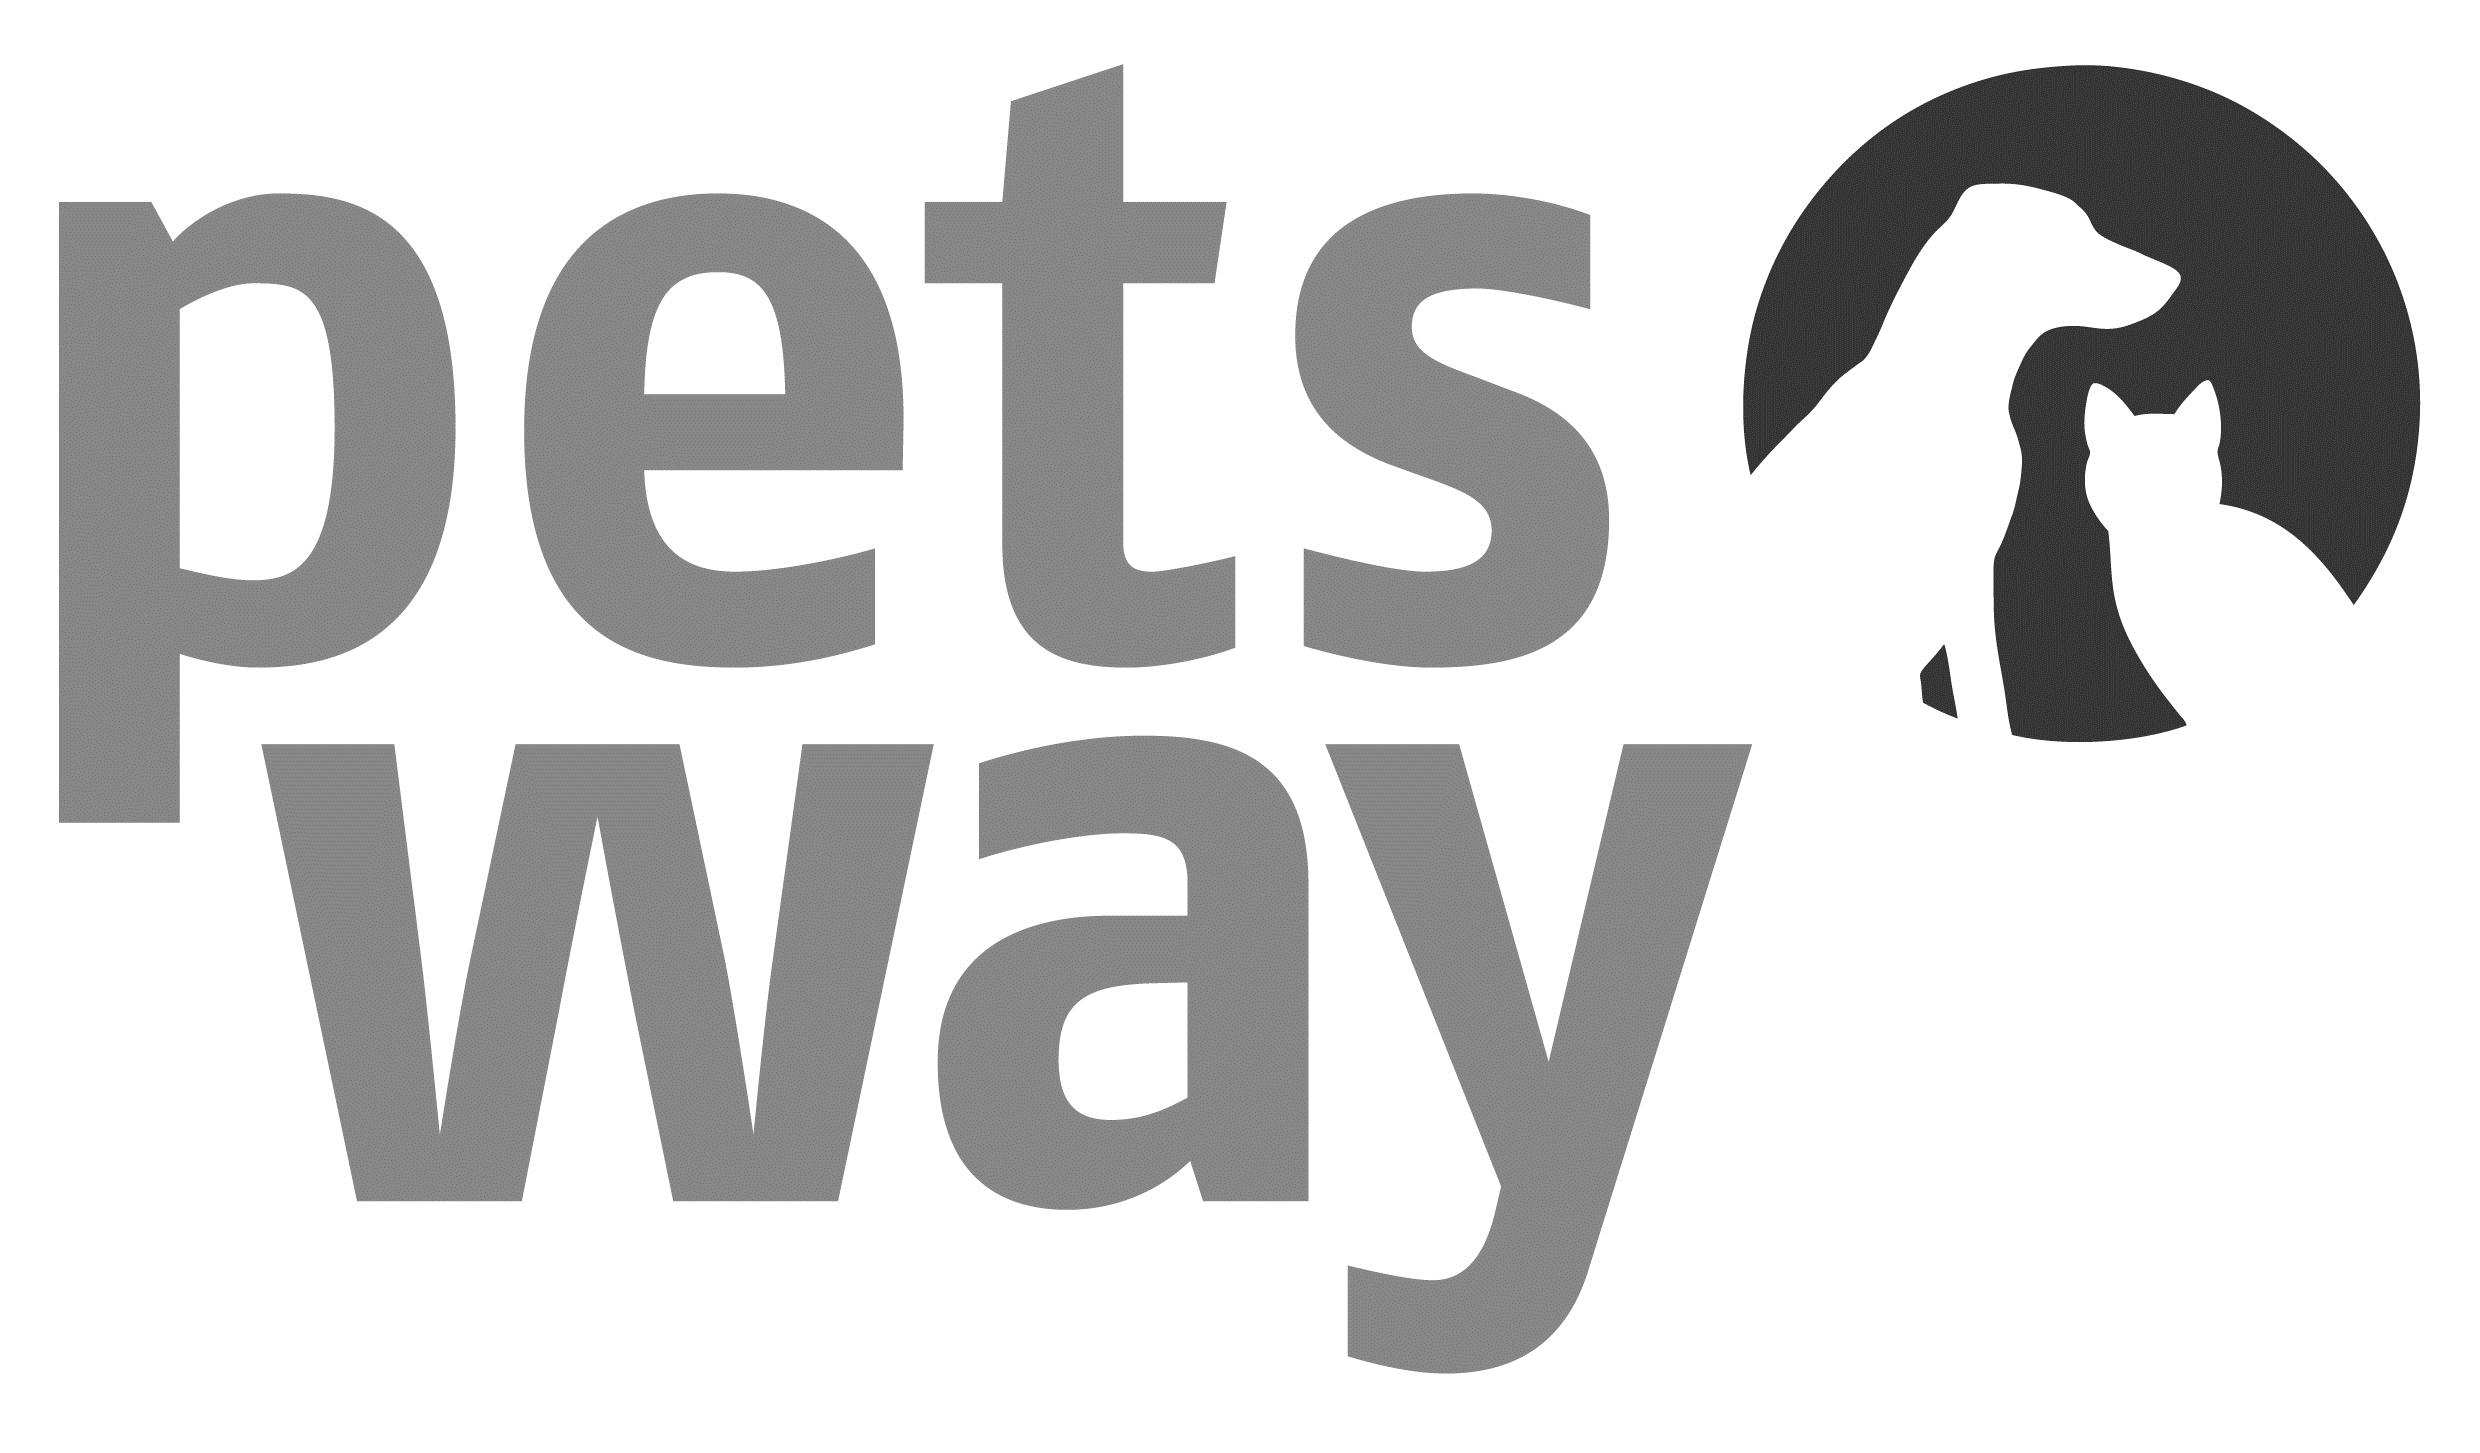 petsway GmbH